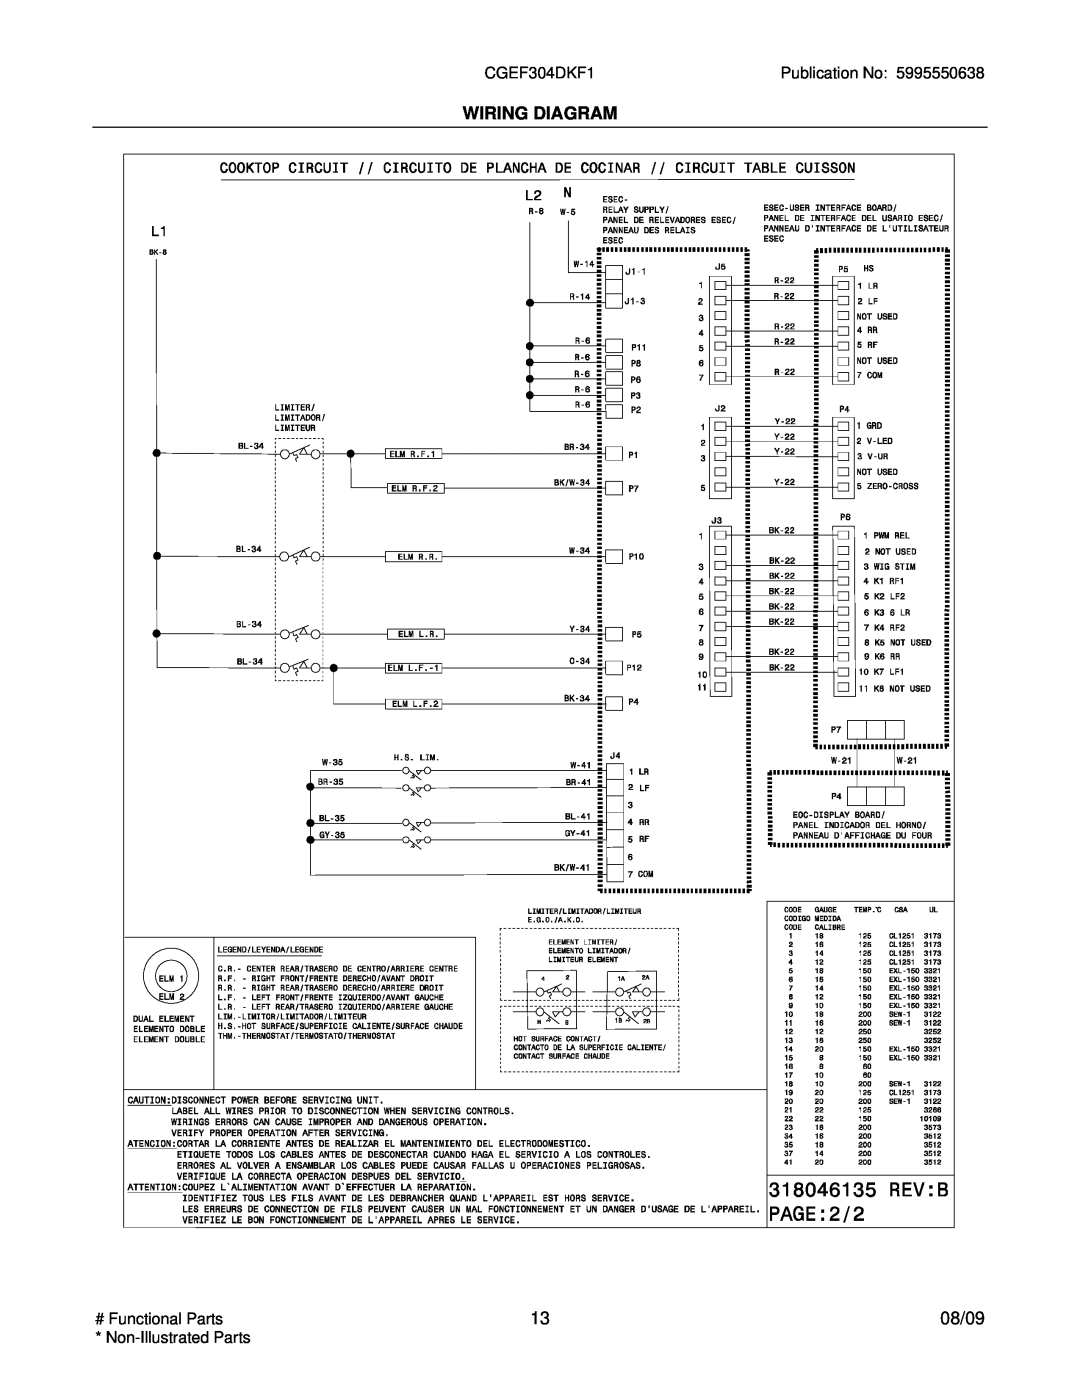 Electrolux CGEF304DK installation instructions Wiring Diagram, 08/09 